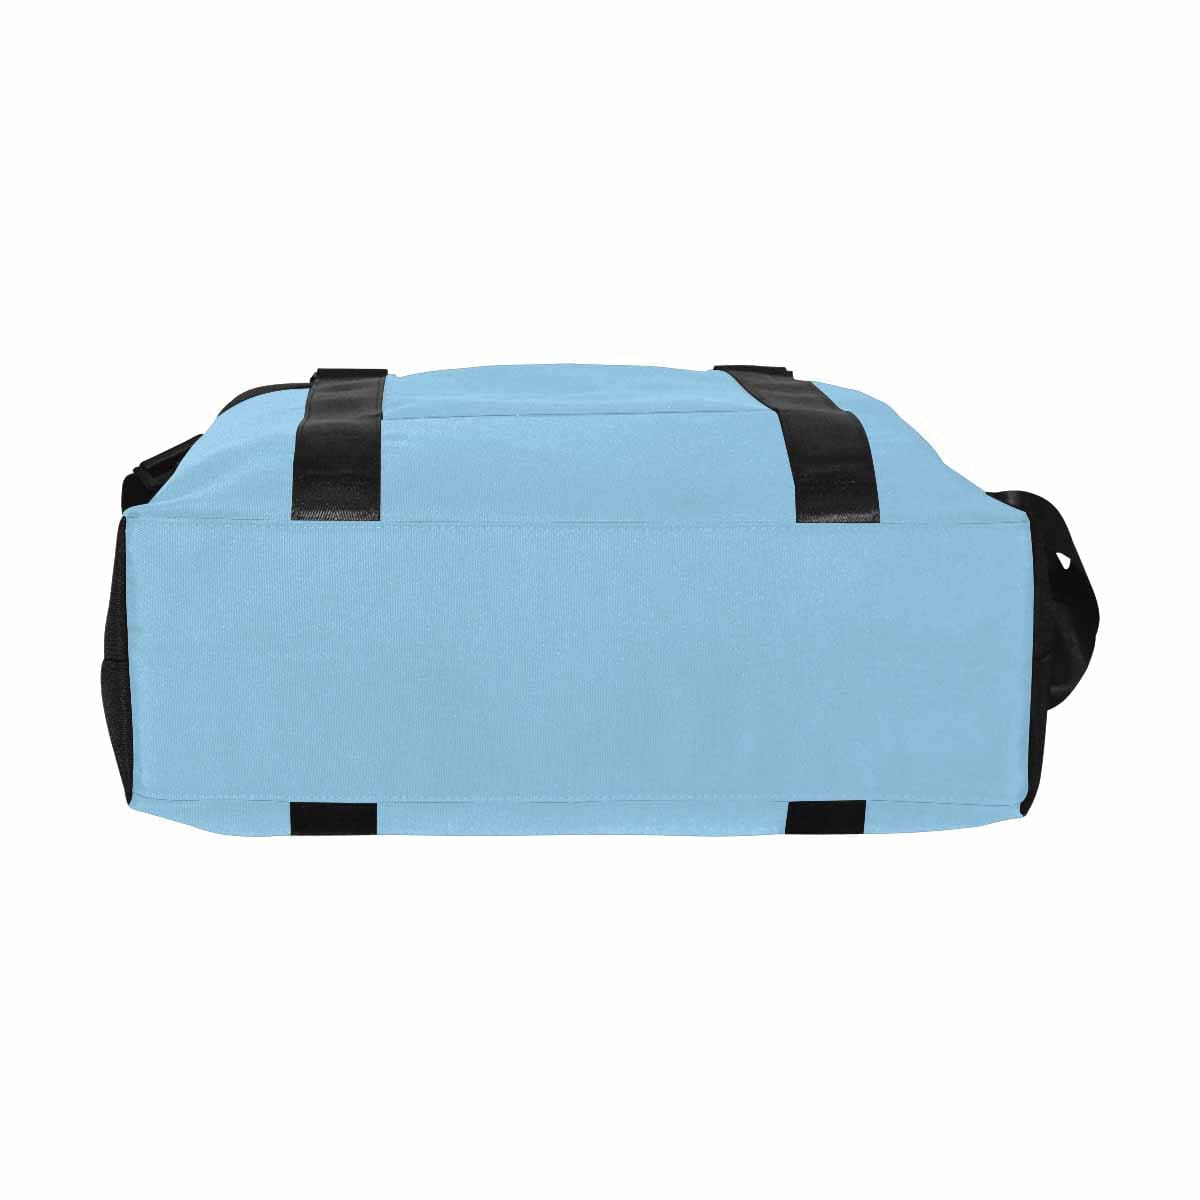 Cornflower Blue Duffel Bag Large Travel Carry On - Bags | Duffel Bags